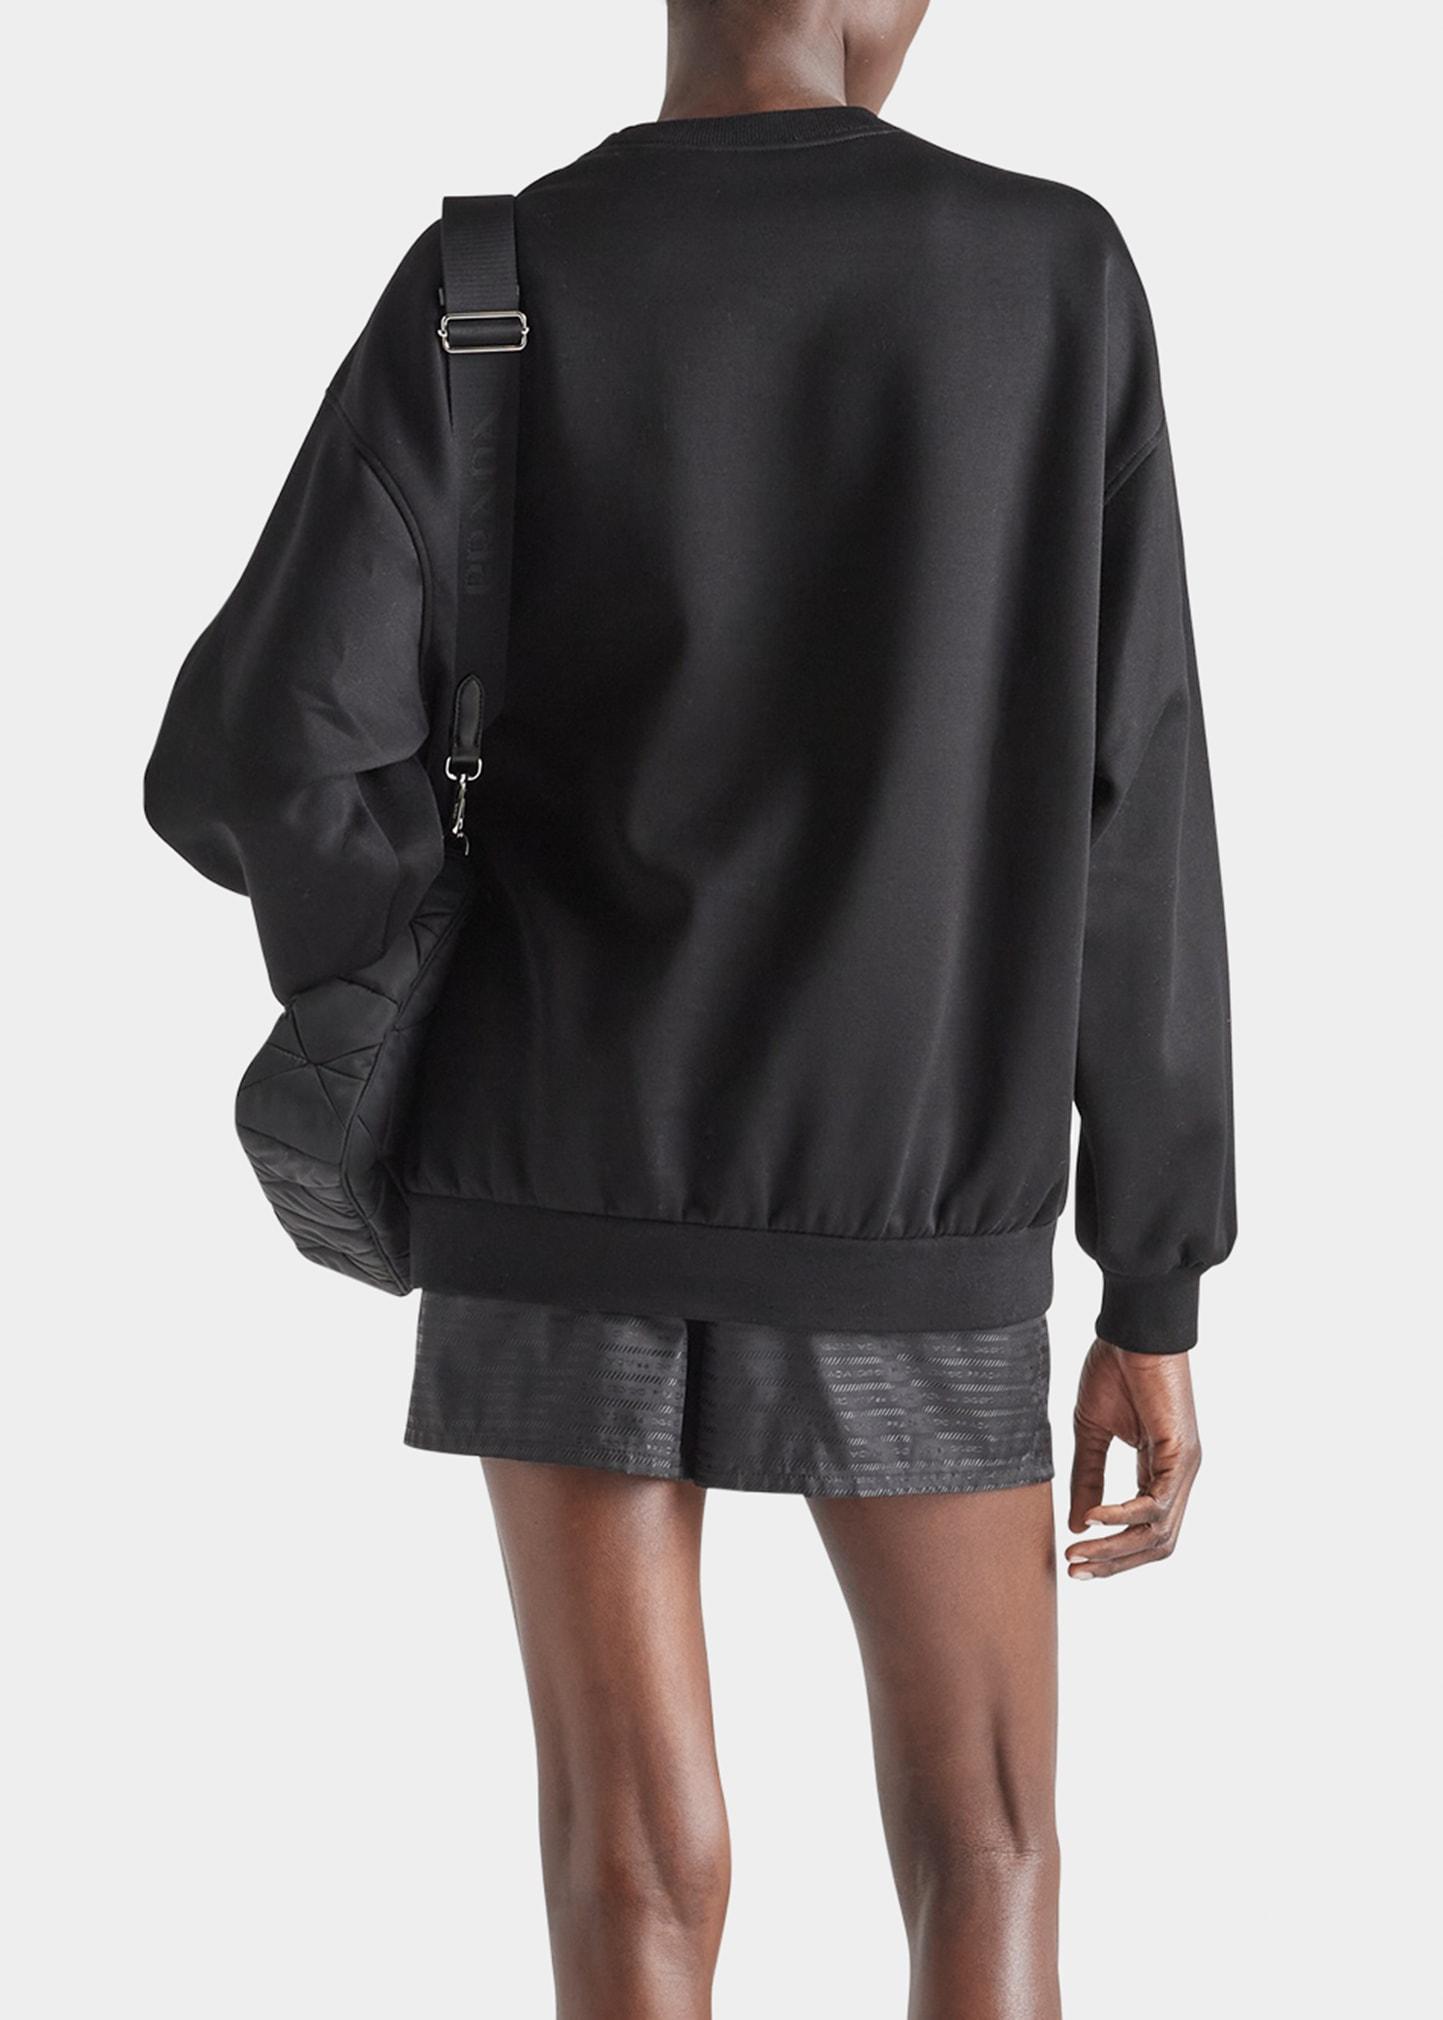 Prada Recycled Nylon Fleece-sleeve Pullover Top in Black | Lyst